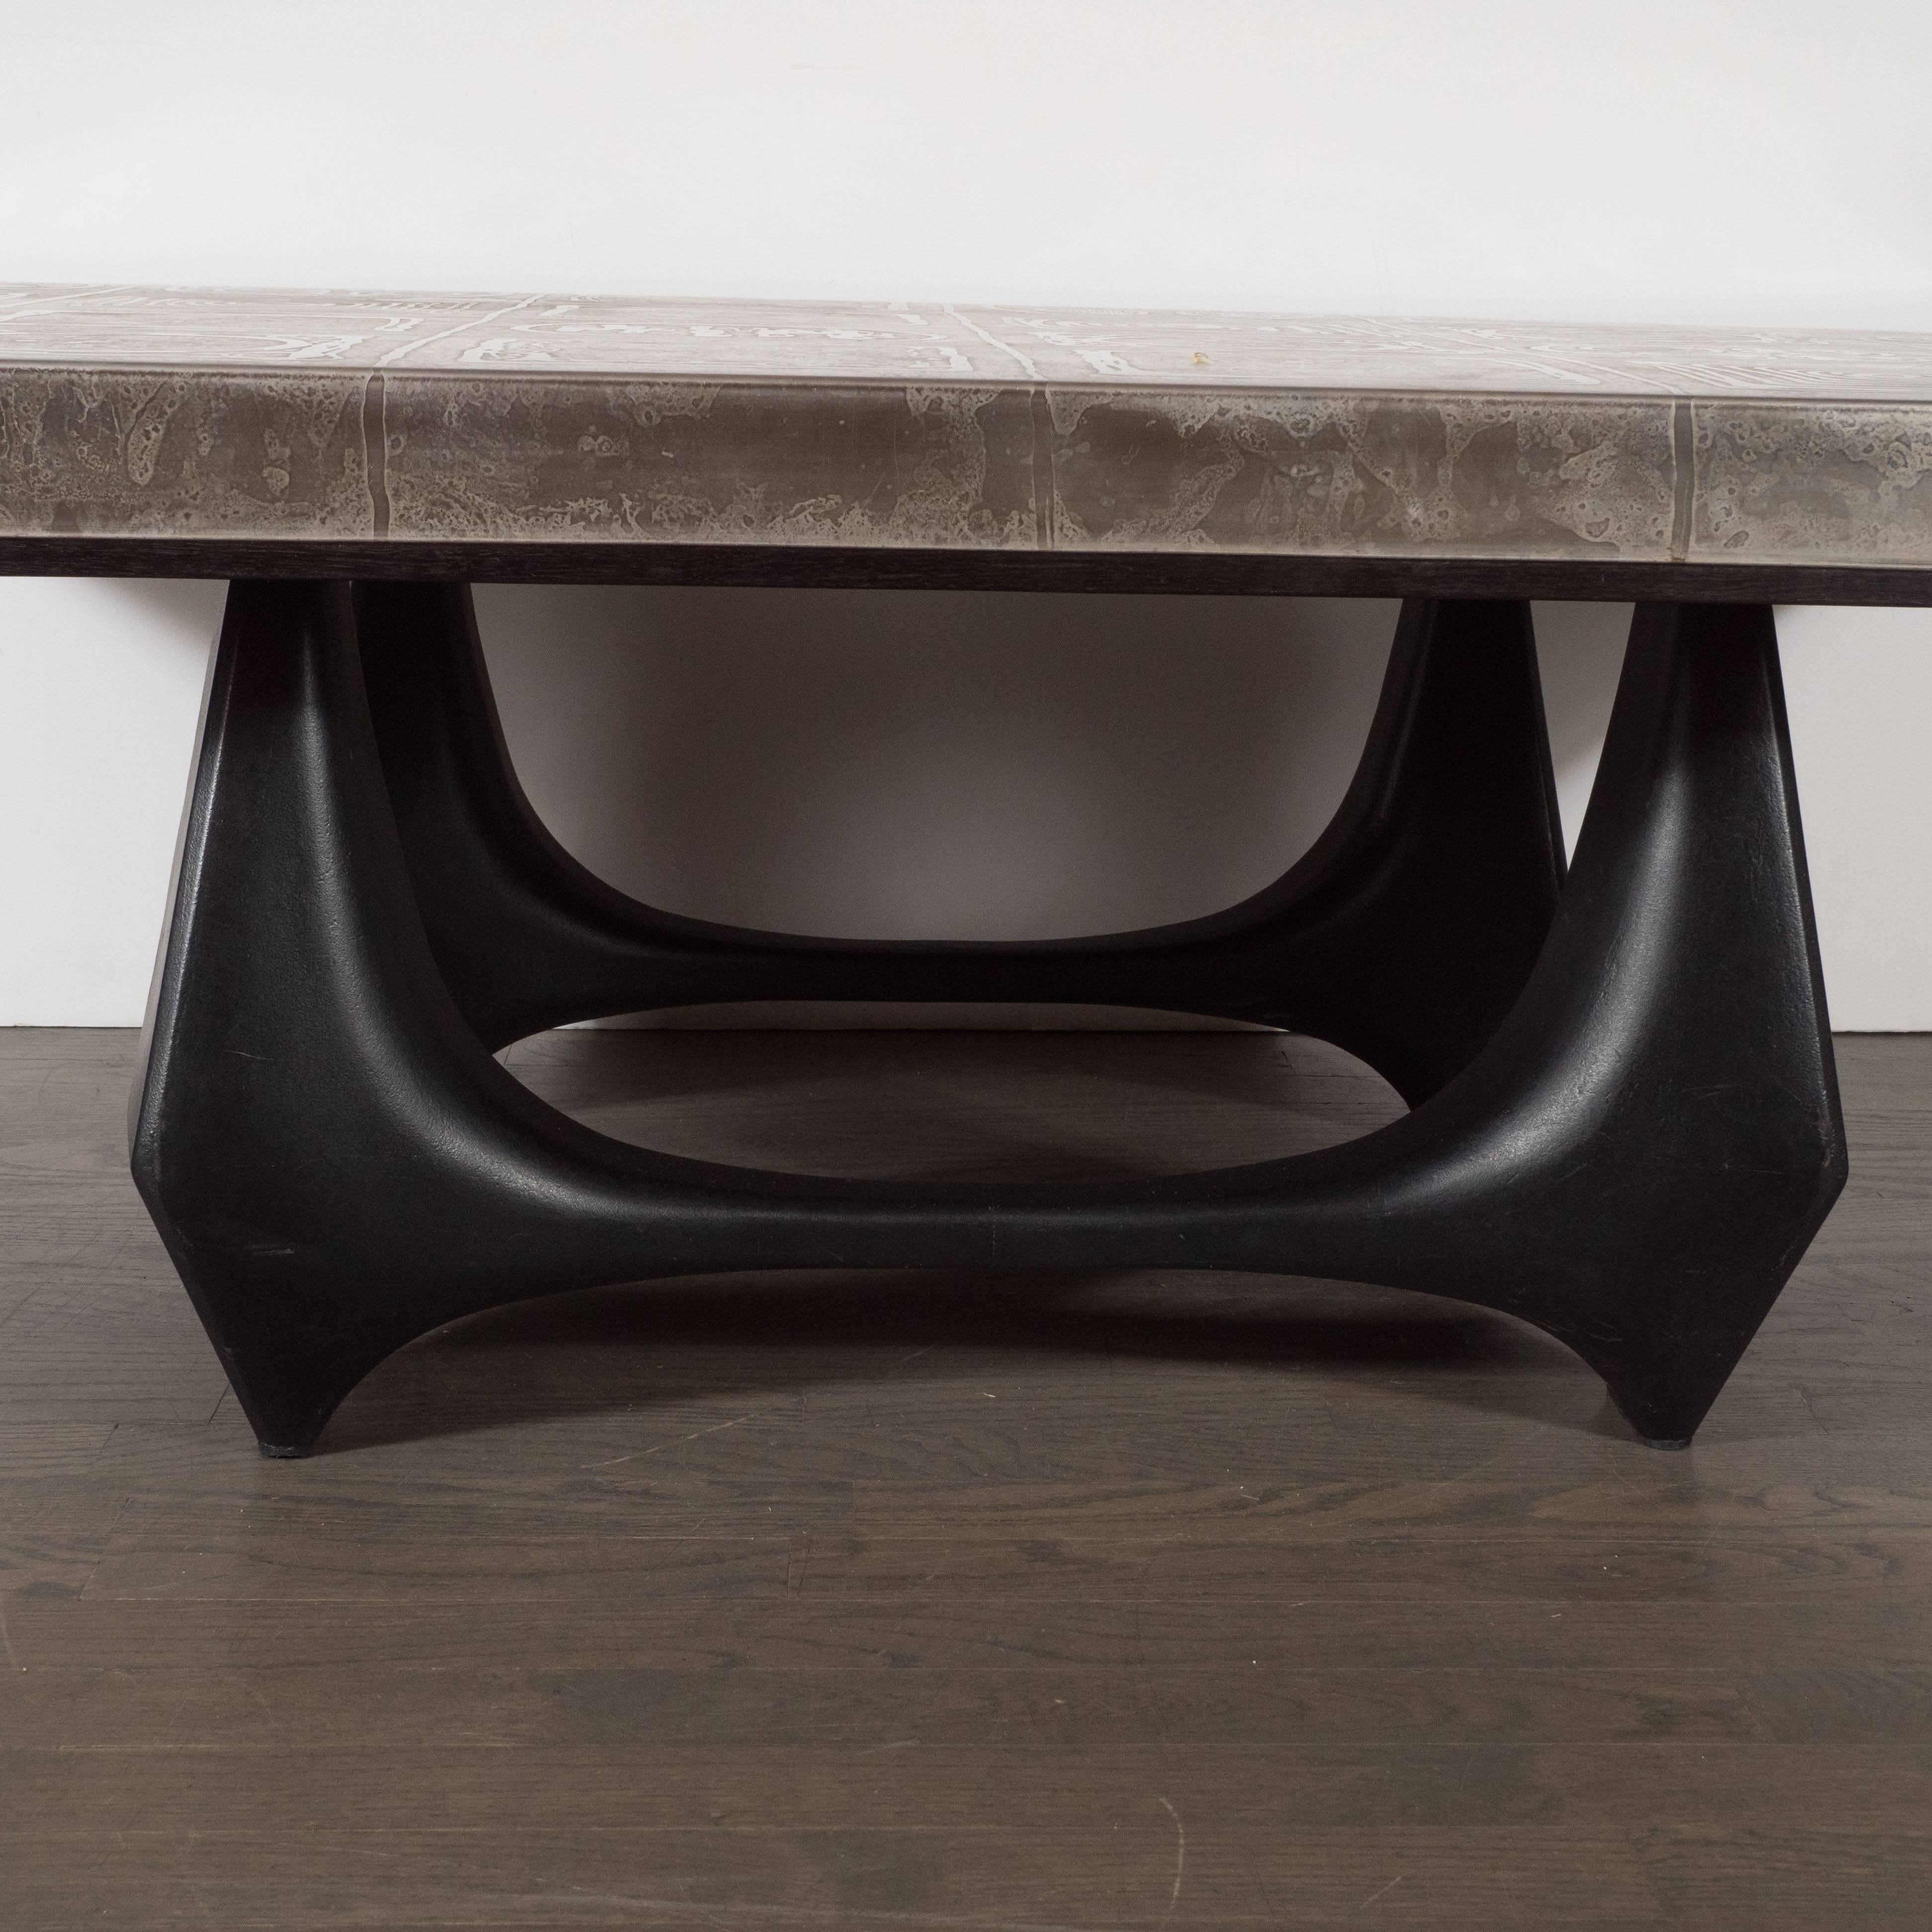 Ebonized Mid-Century Modernist Acid Etched Aluminum Table with Sculptural Black Base